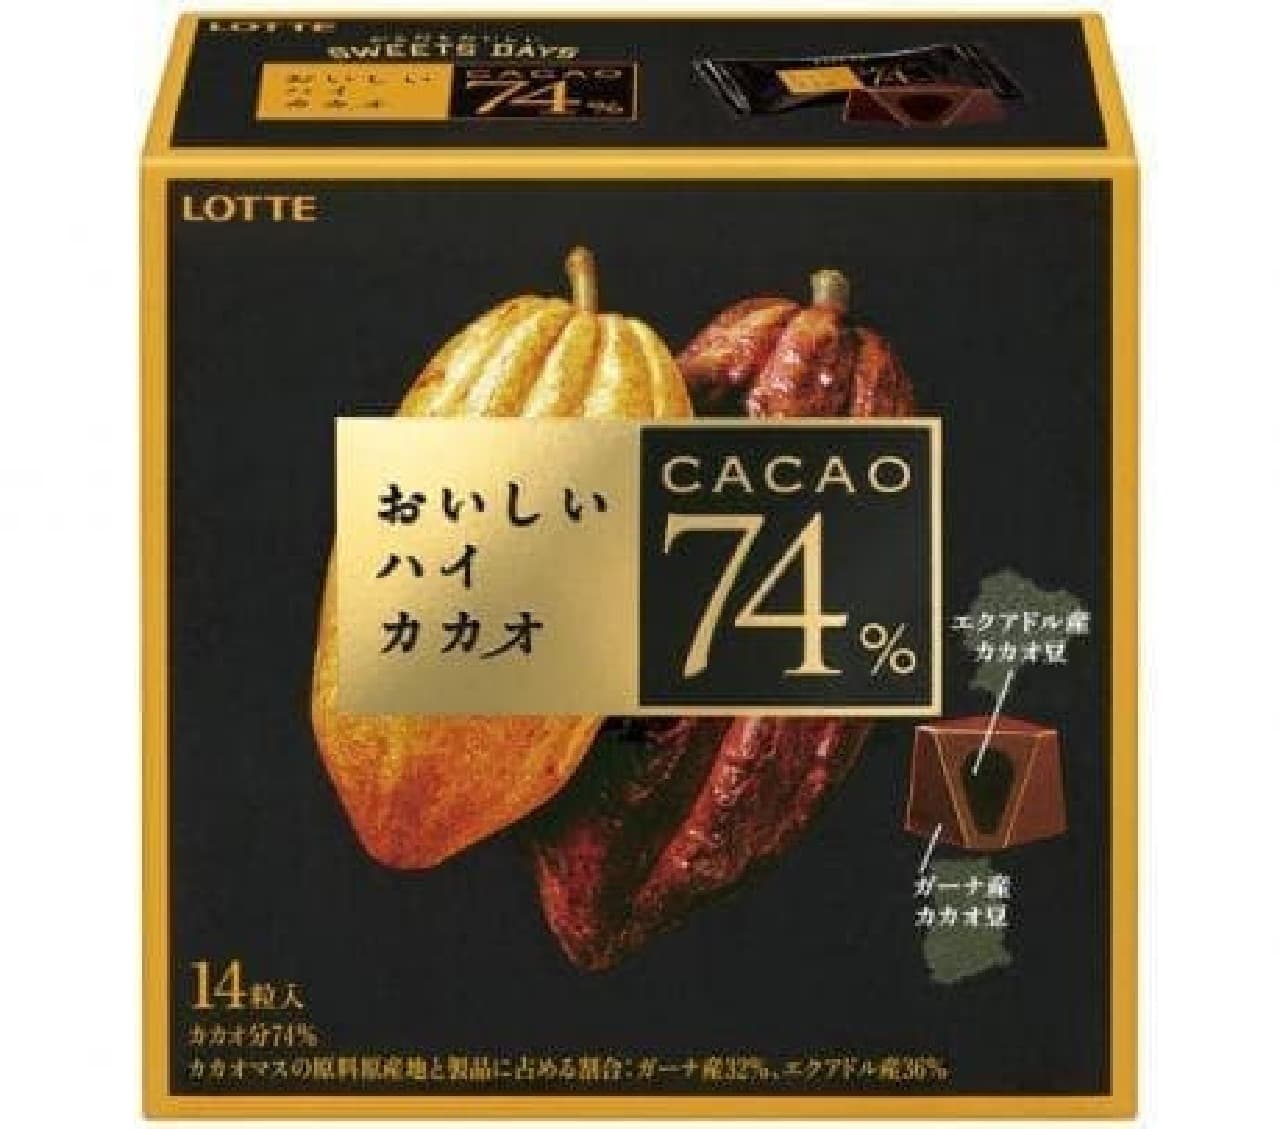 Lotte "Sweets Days Delicious High Cacao 74% [Ecuador & Ghana]"